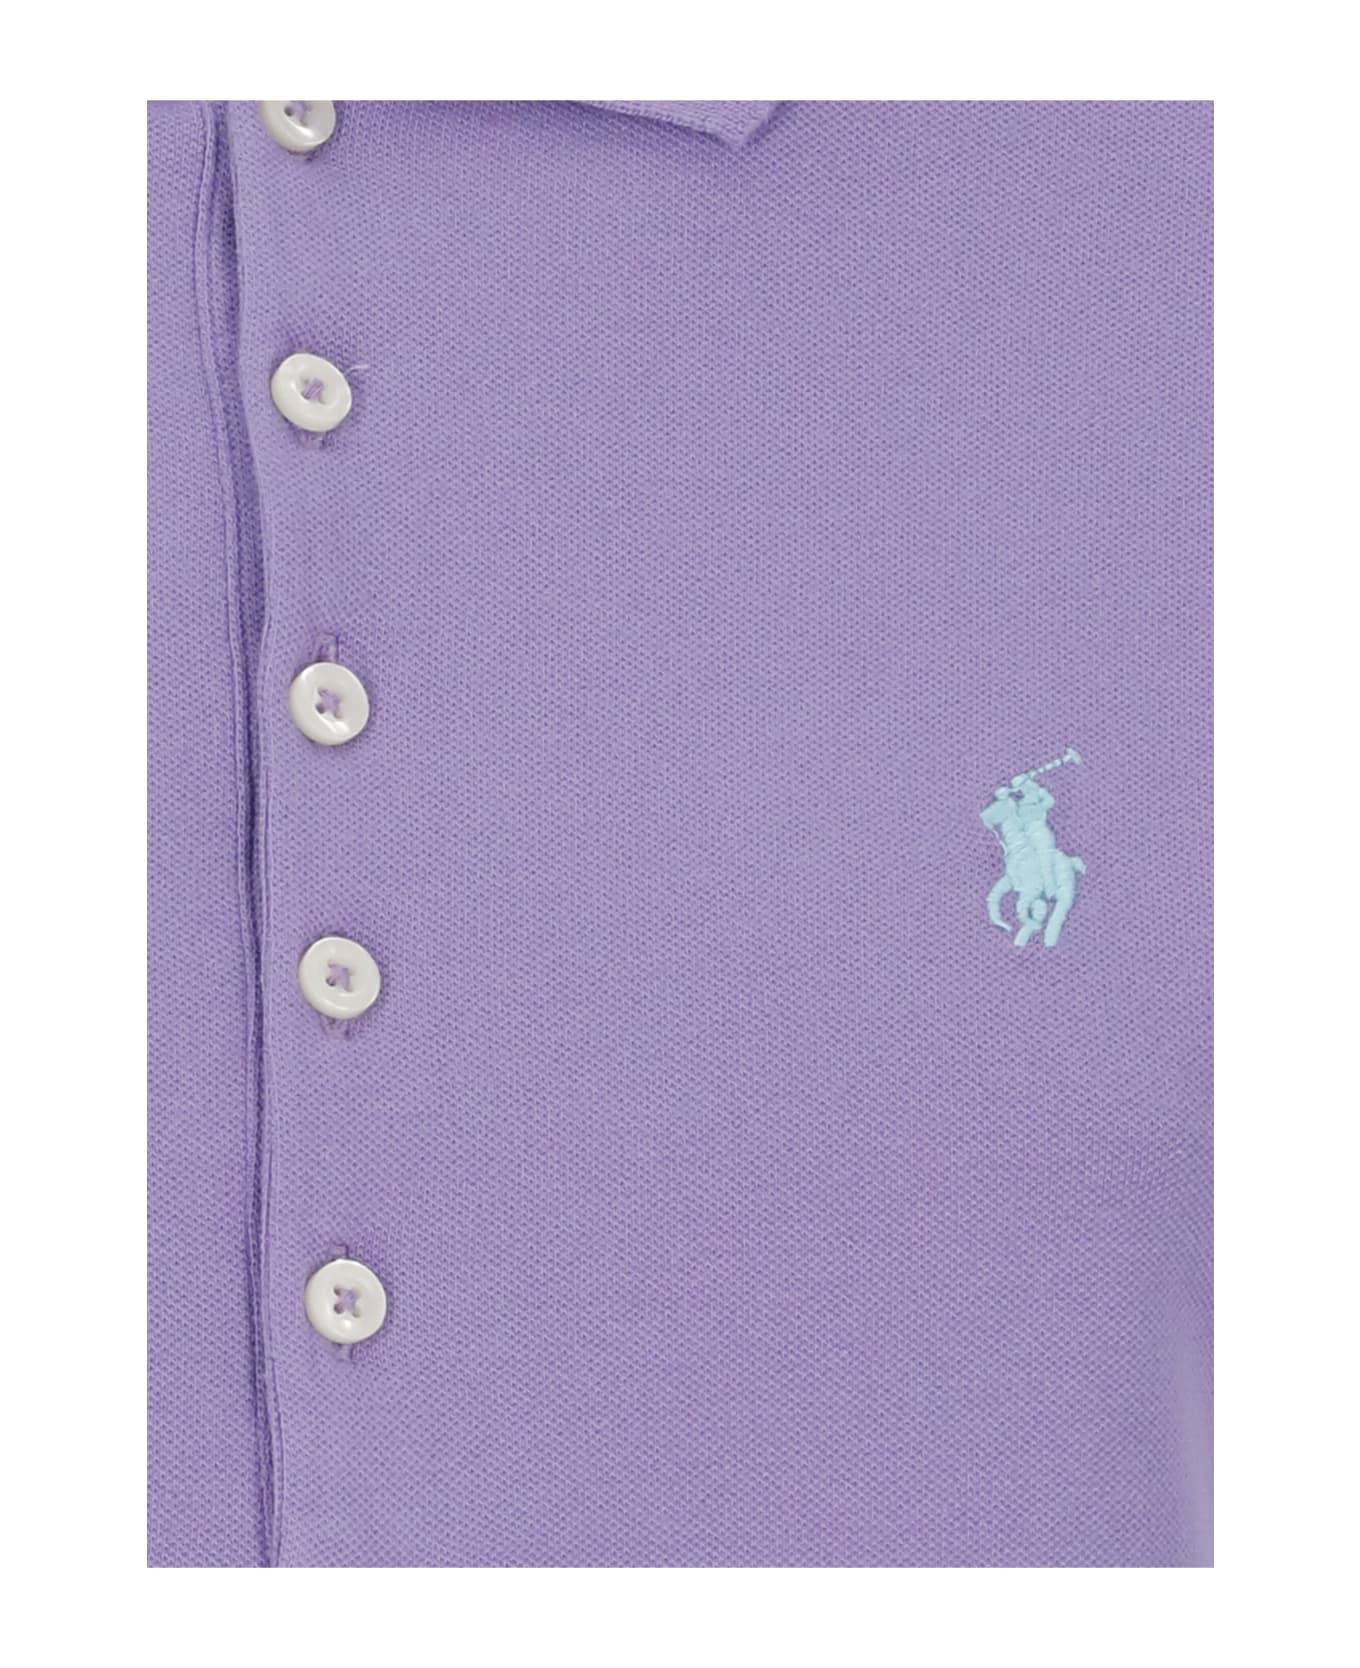 Ralph Lauren Polo Shirt With Pony Logo - Cactus Purple ポロシャツ